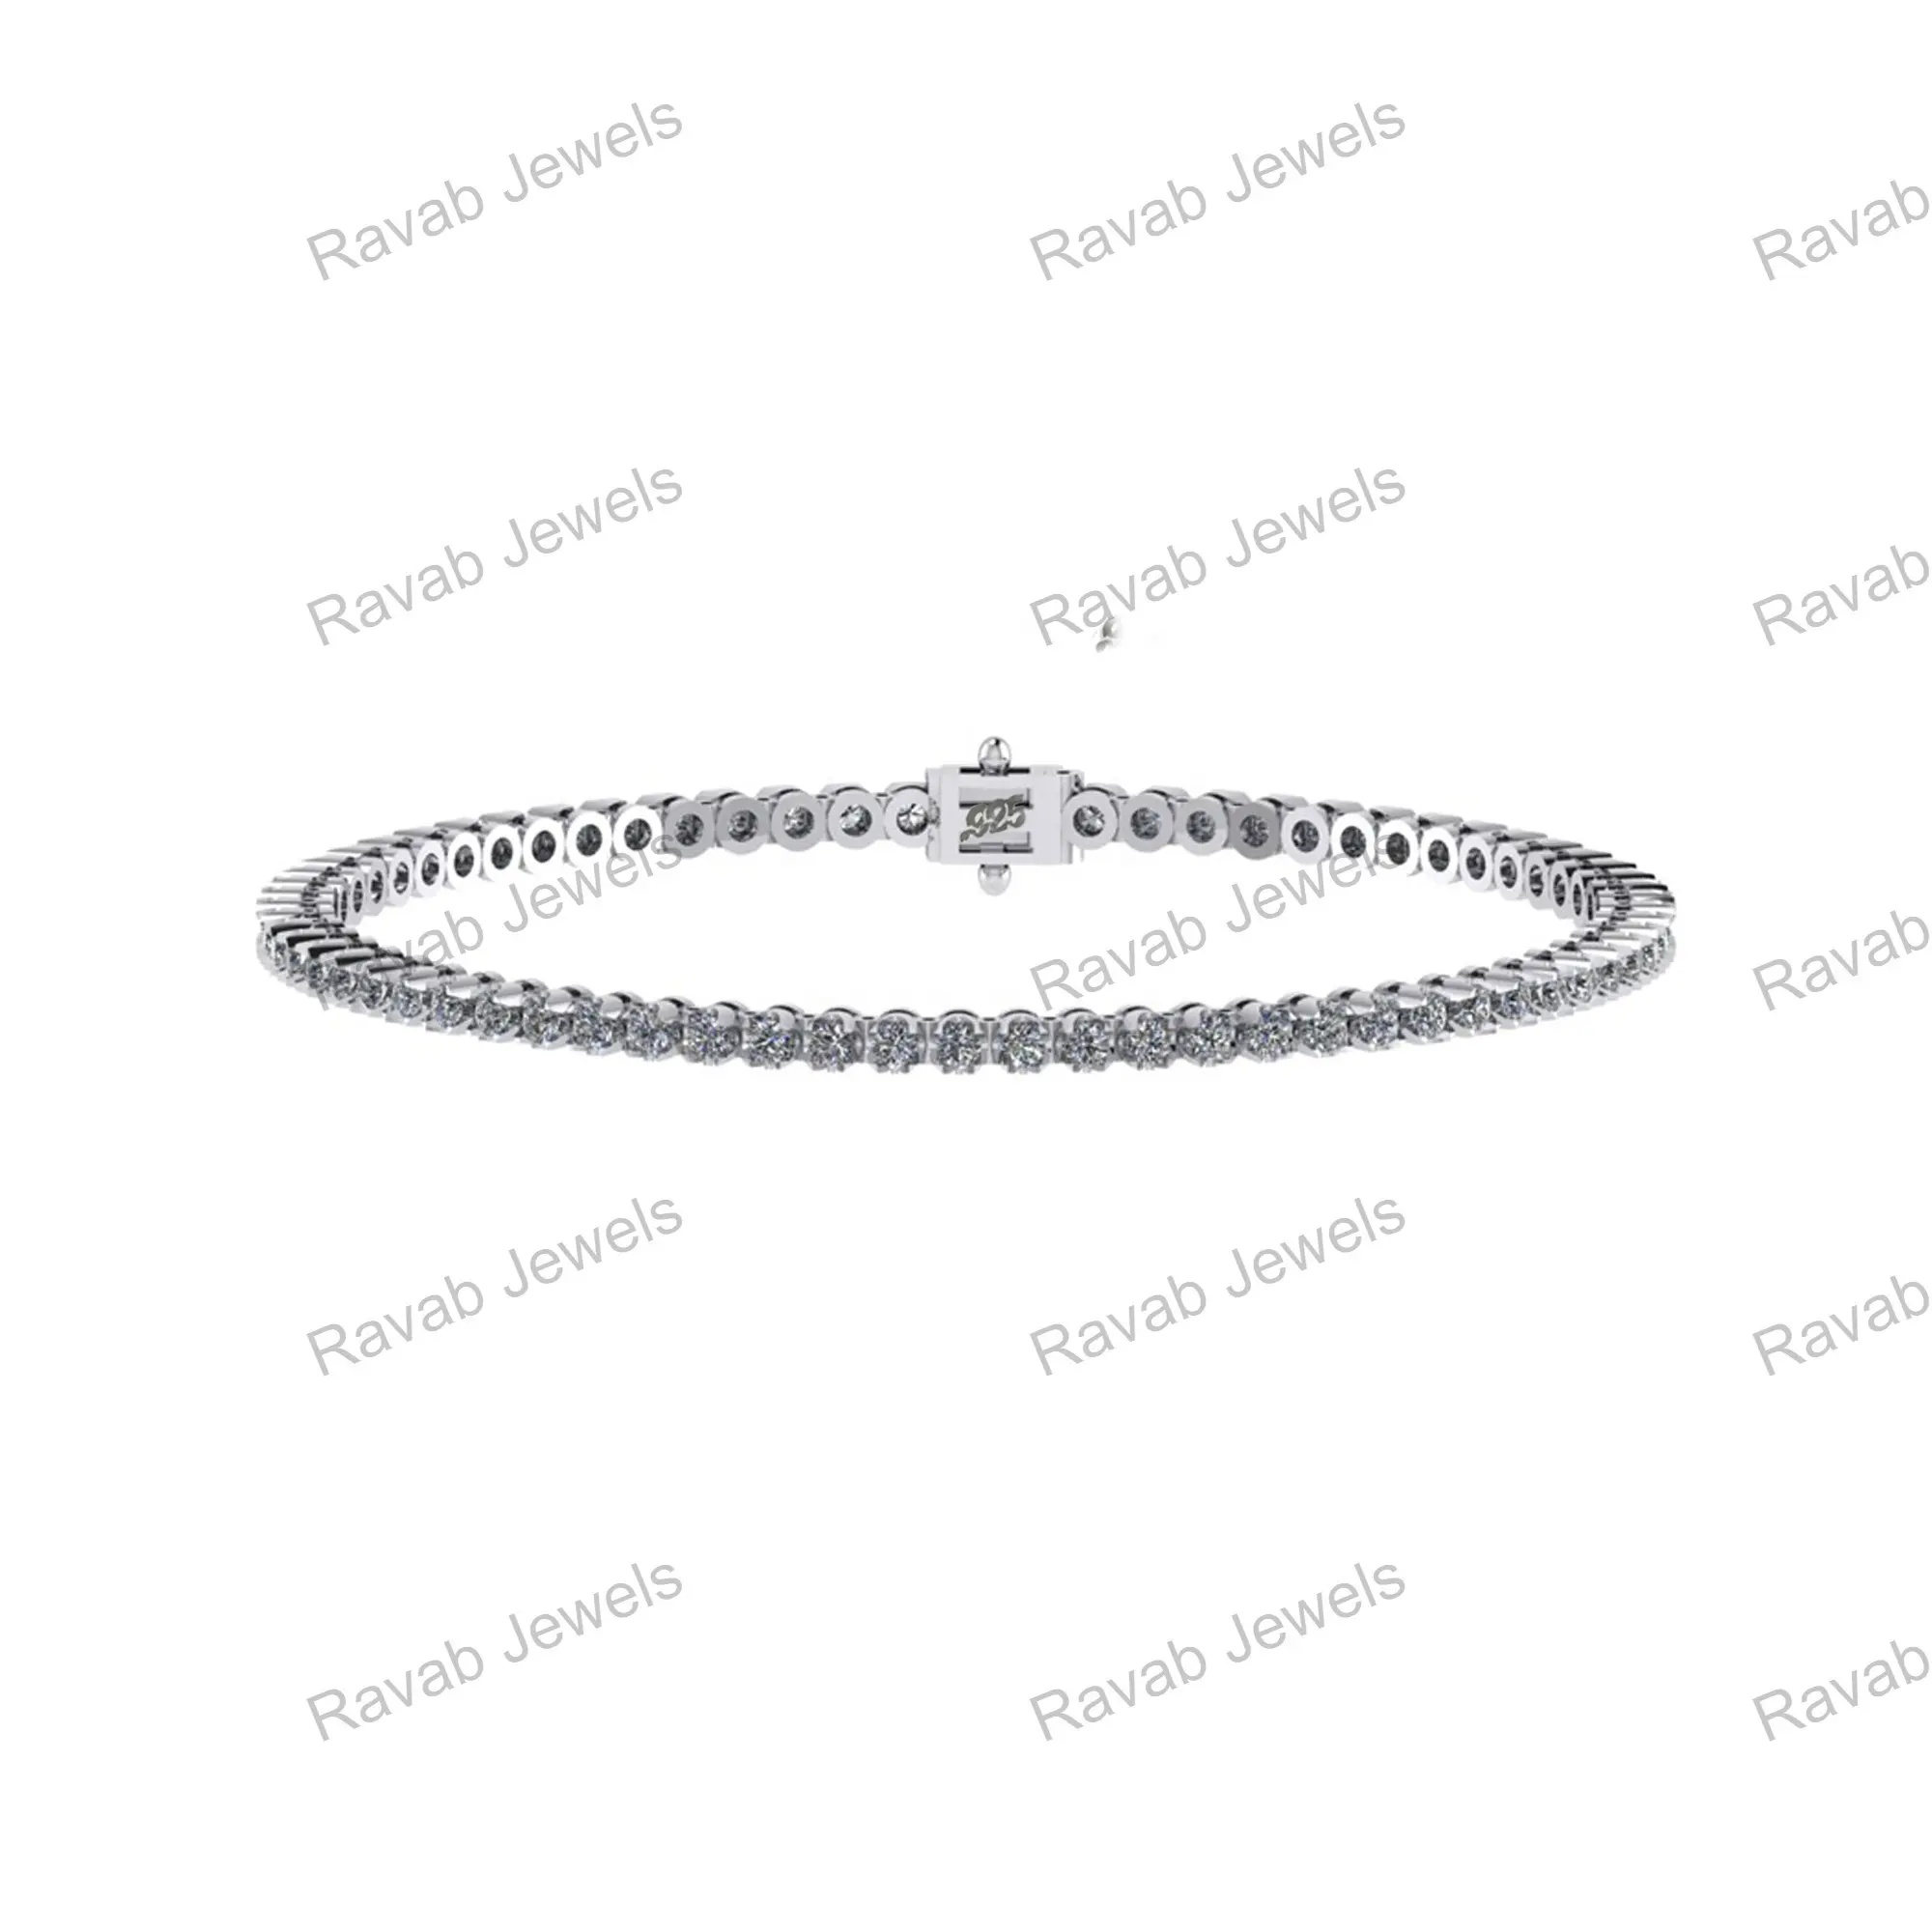 RJB-23 Premium Quality Custom Tennis Bracelet Design Unisex Silver Jewelry Best Price Cubic Zircon S925 Sterling Christmas Gift